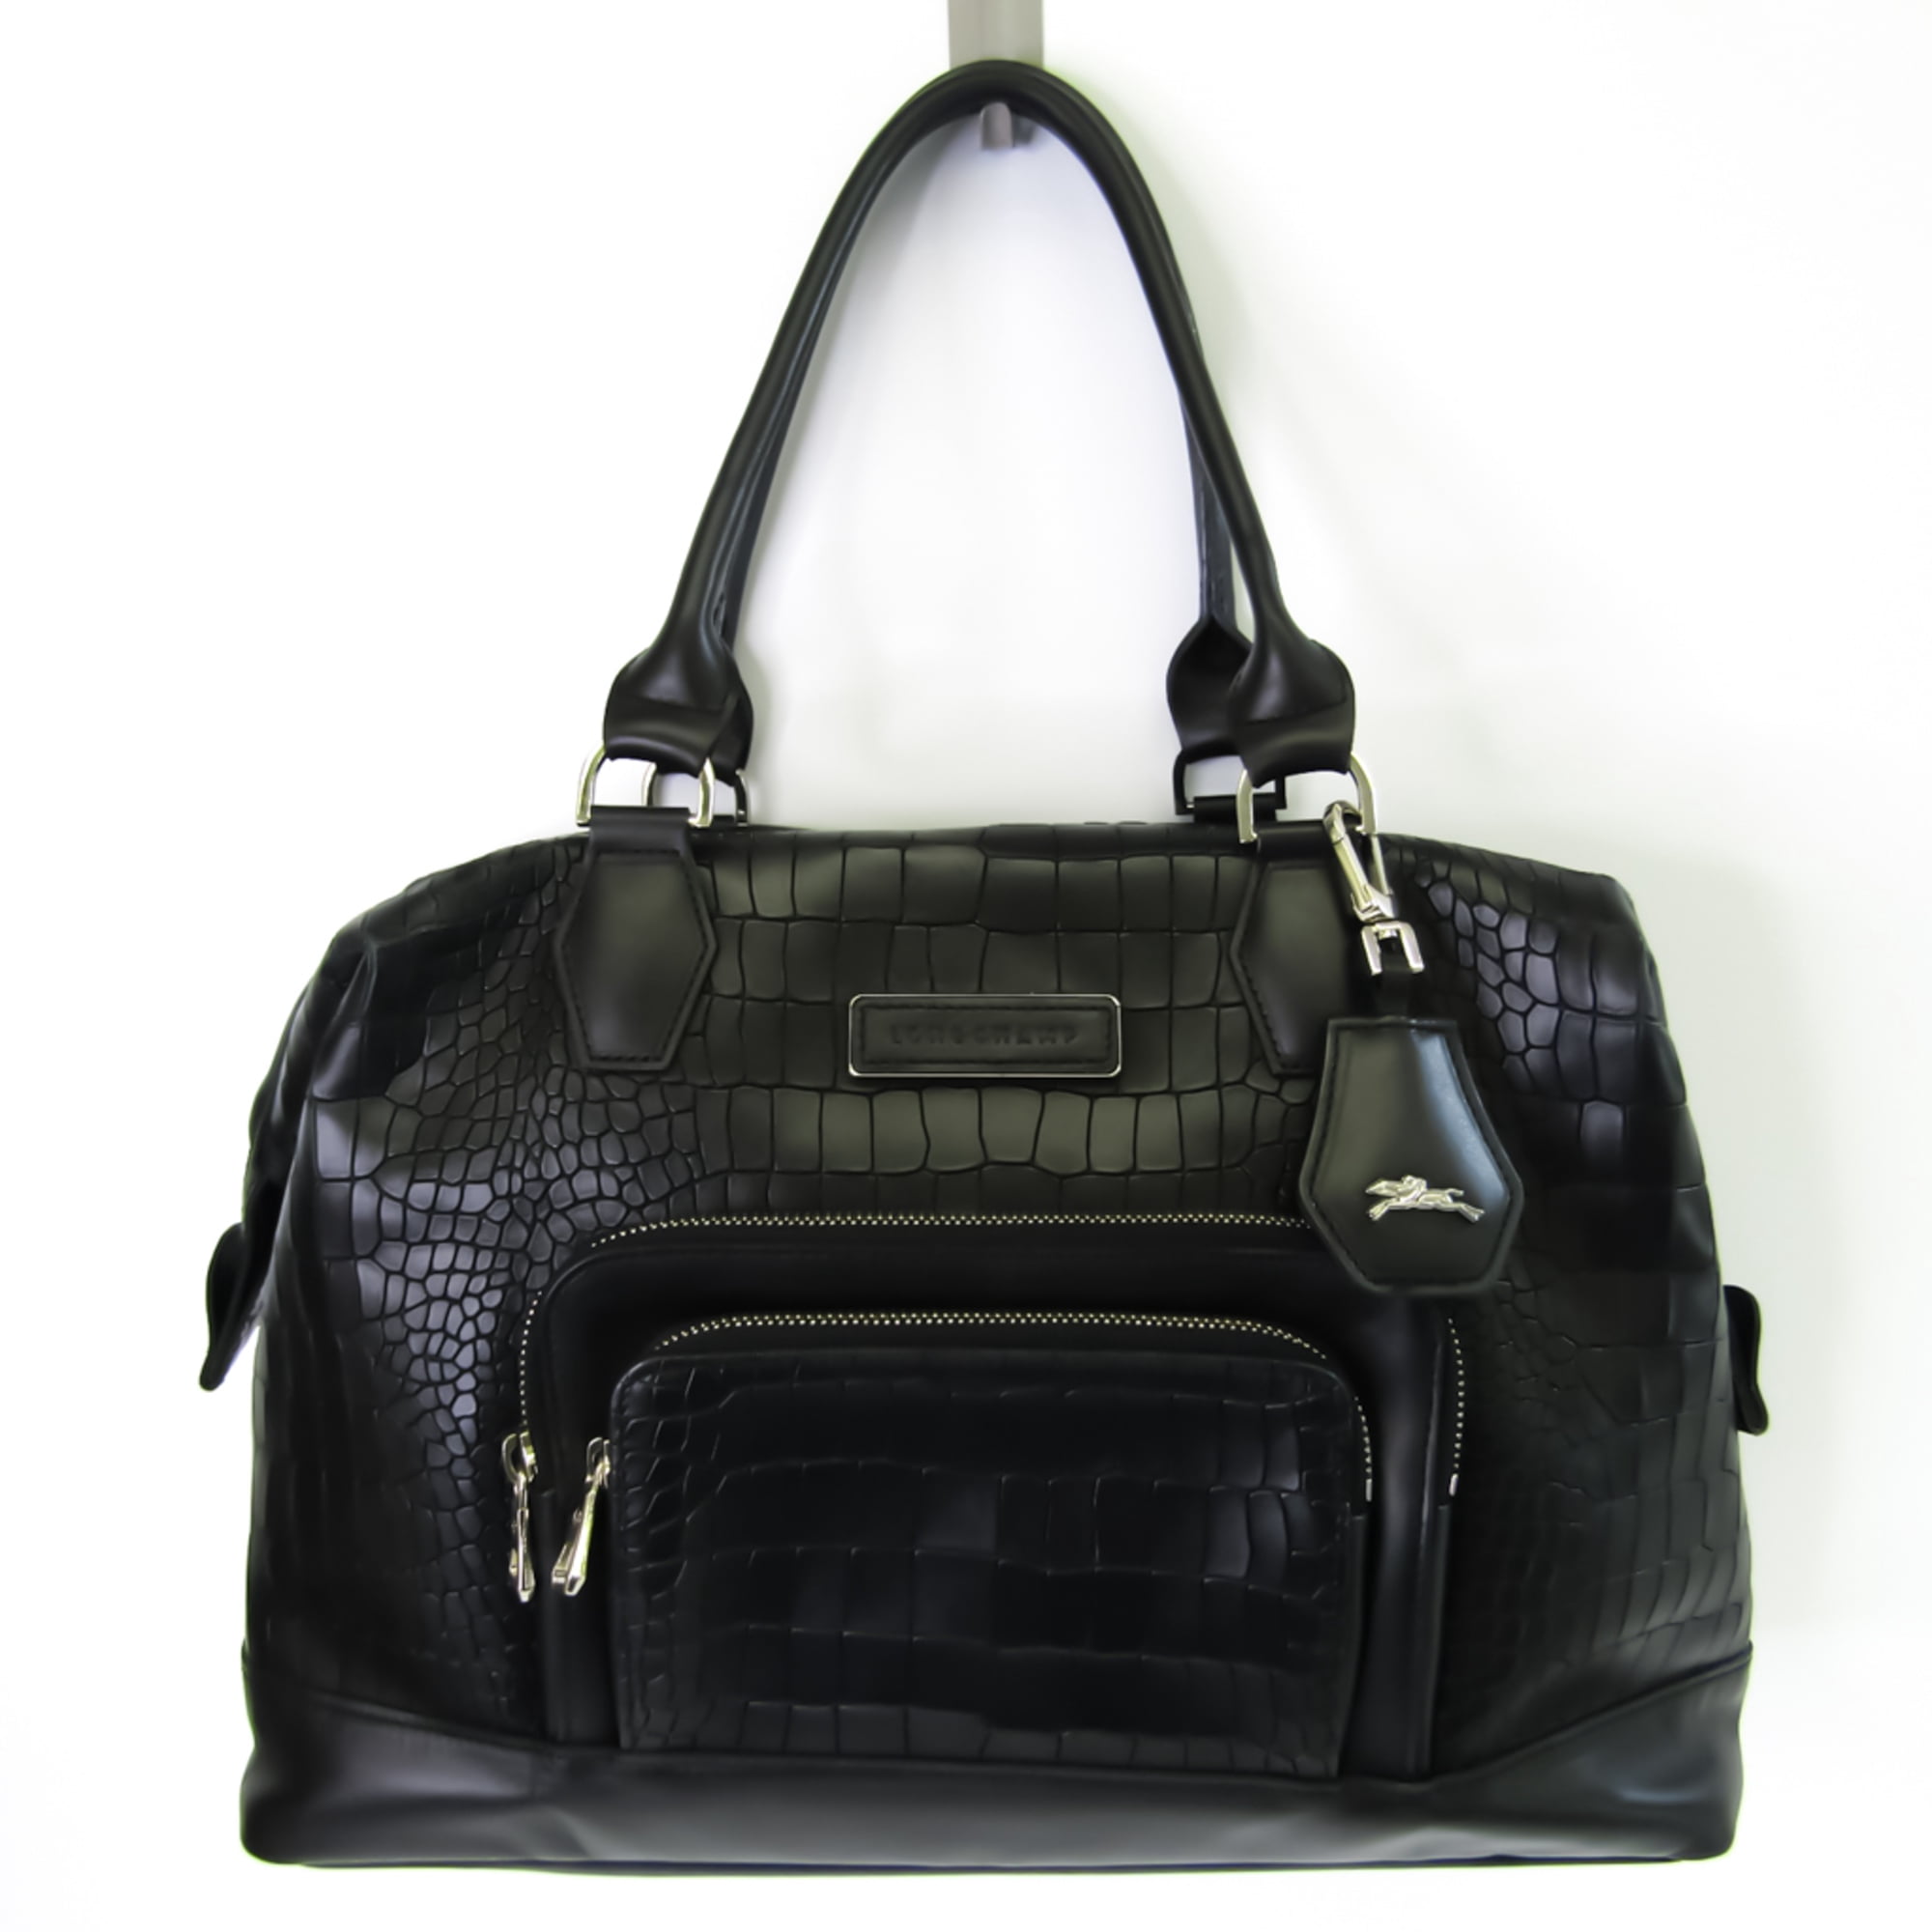 Longchamp Authenticated Leather Handbag